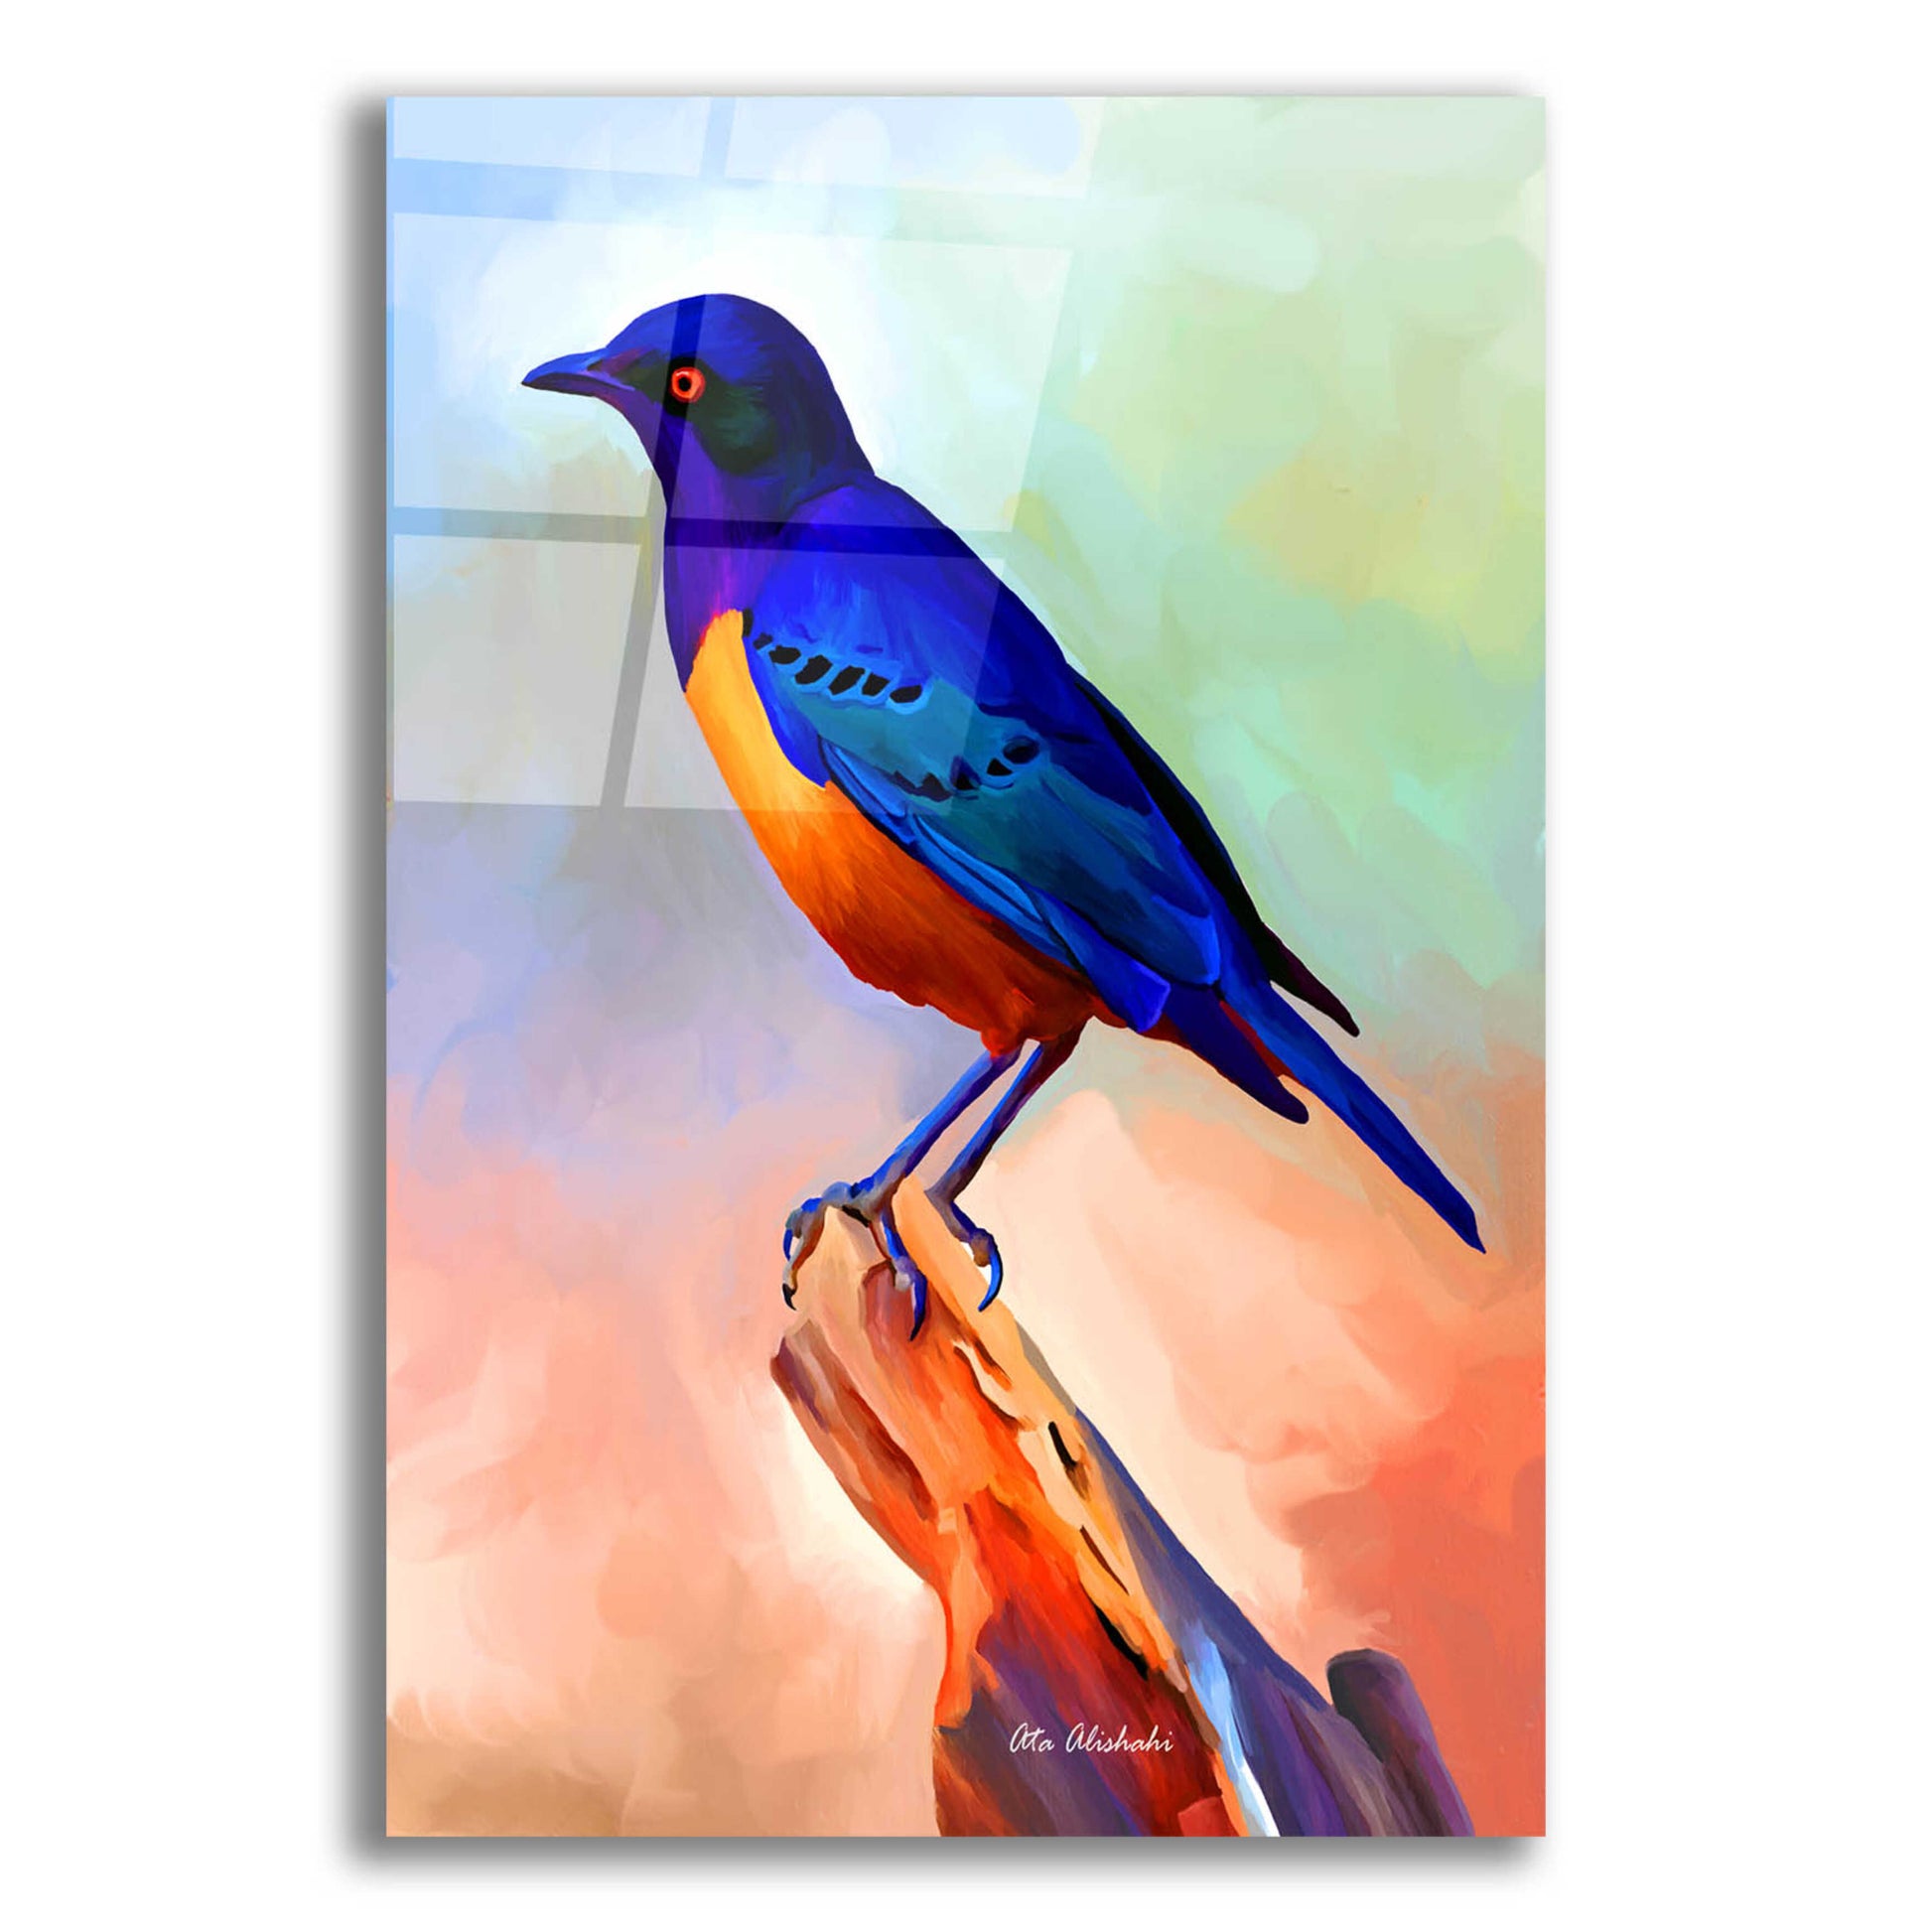 Epic Art 'Bird' by Ata Alishahi, Acrylic Glass Wall Art,16x24